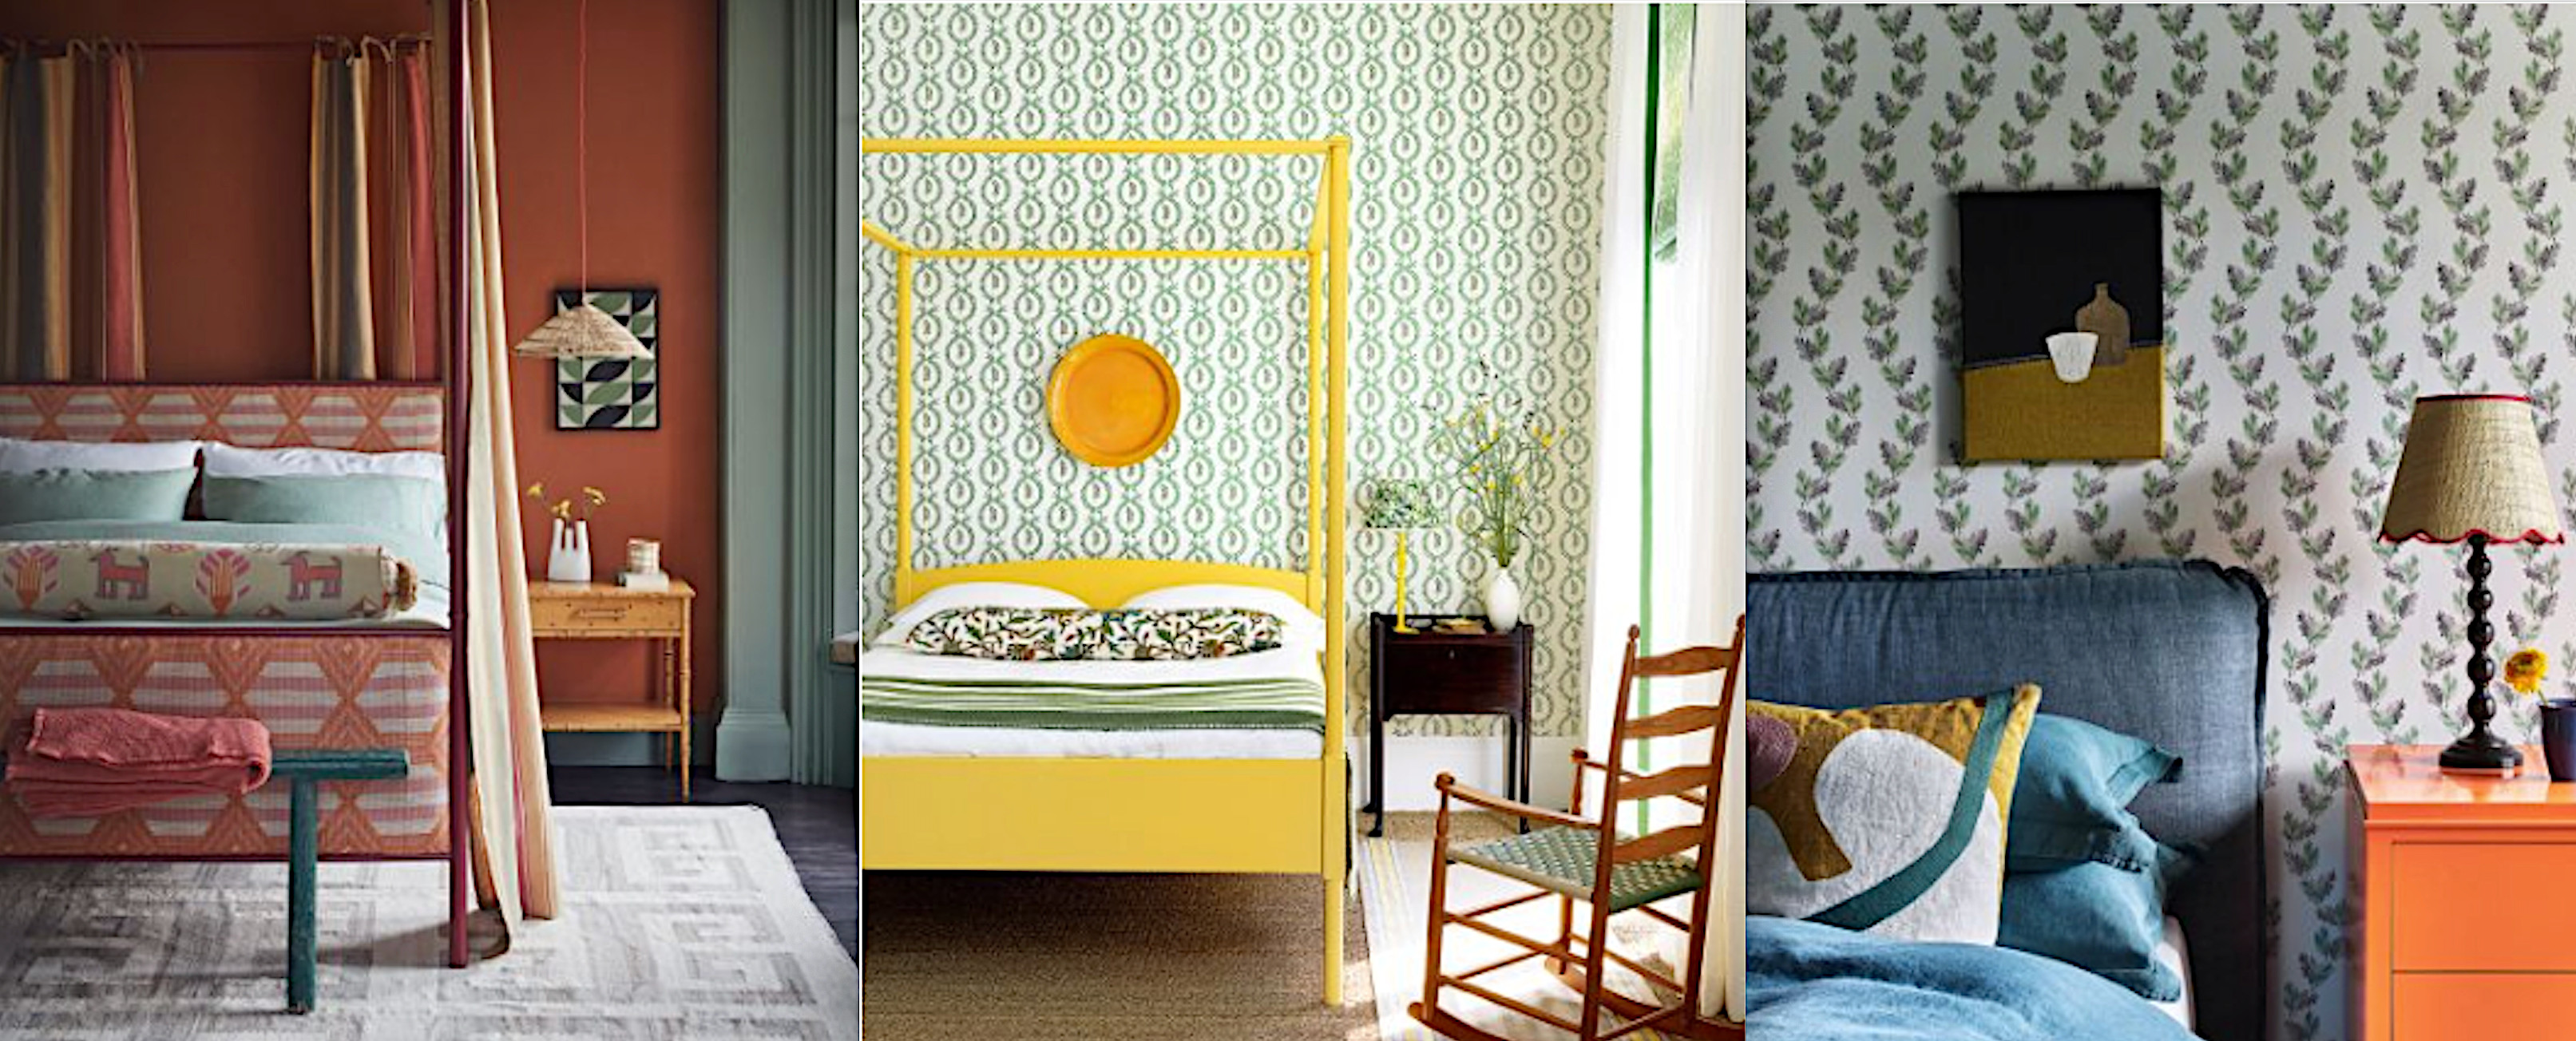 Bedroom ideas: 41 best bedroom designs and inspirations